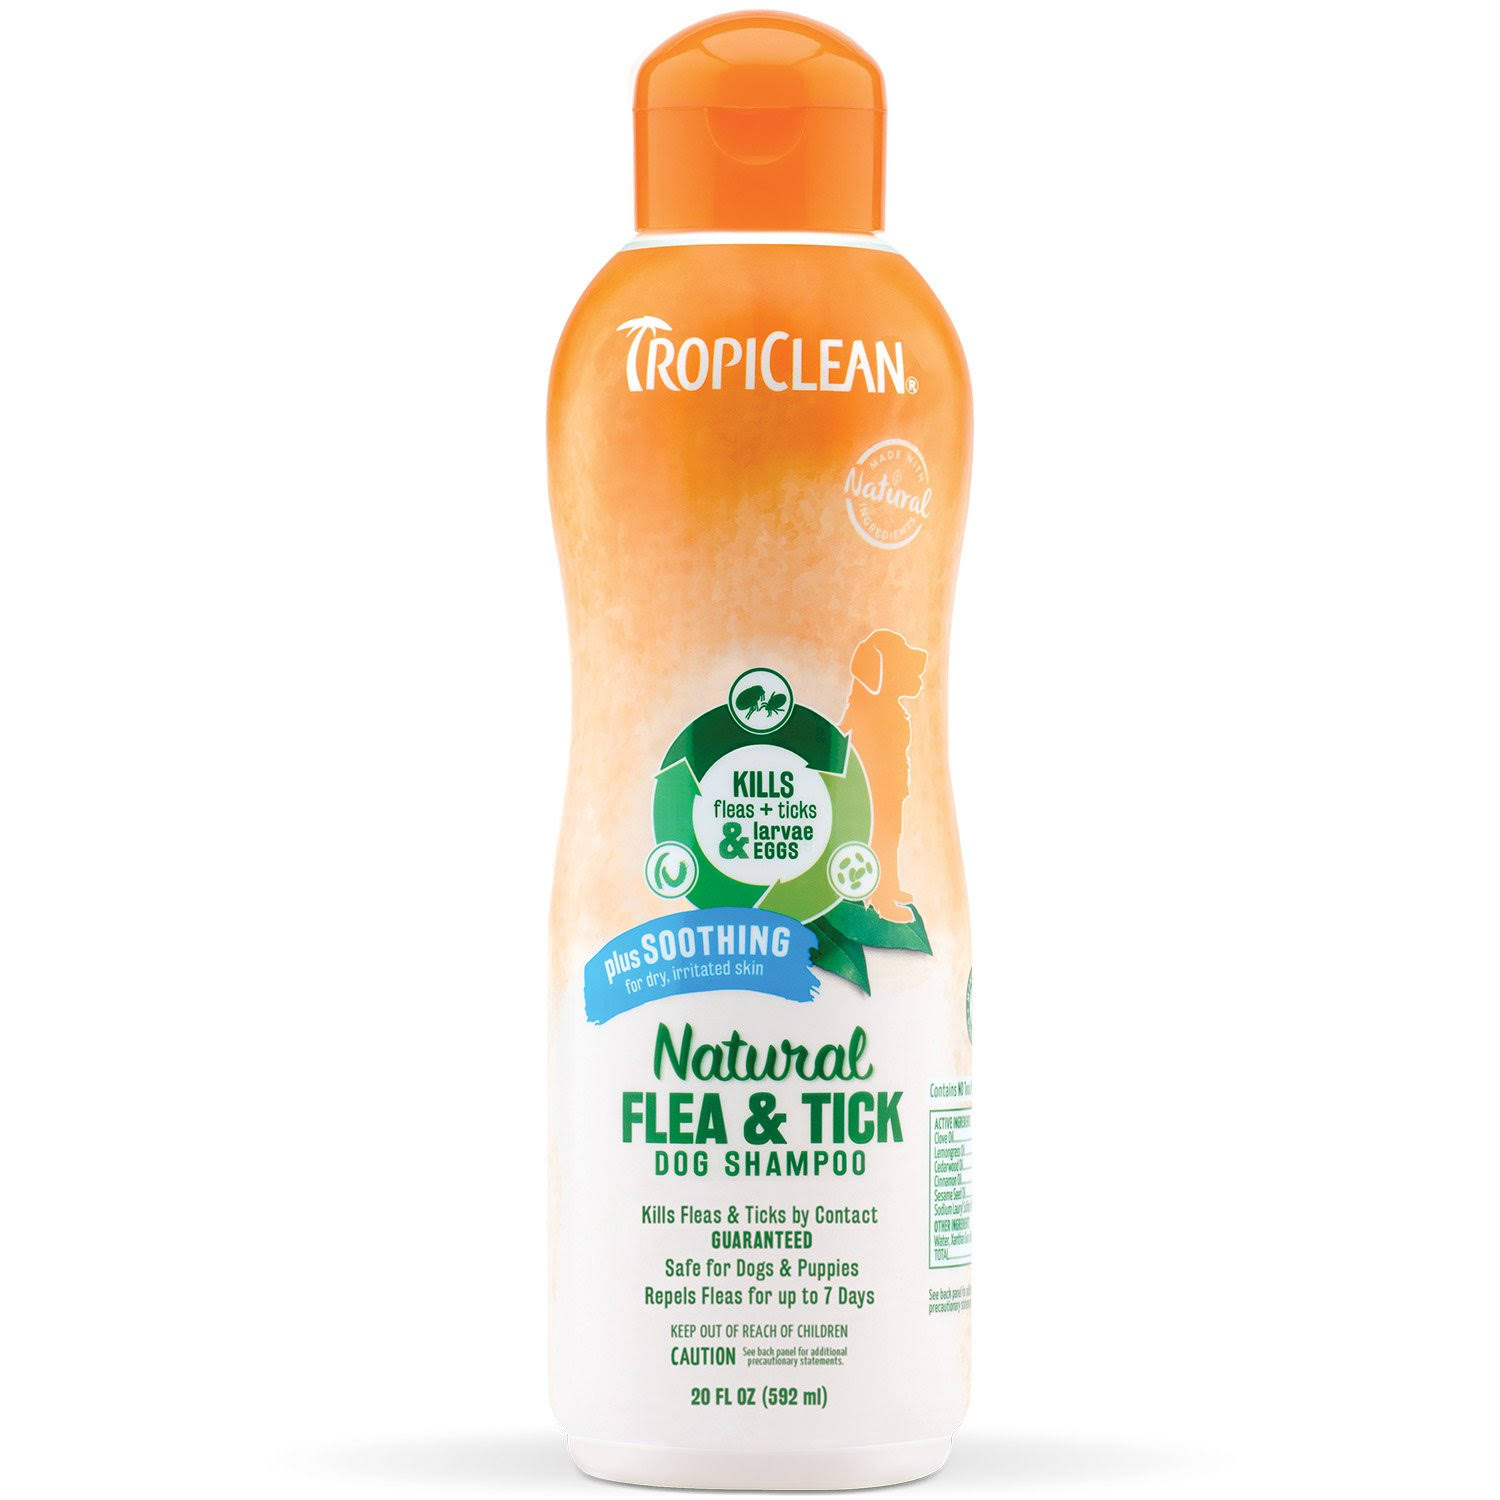 Tropiclean Natural Flea & Tick Dog Shampoo - 592ml